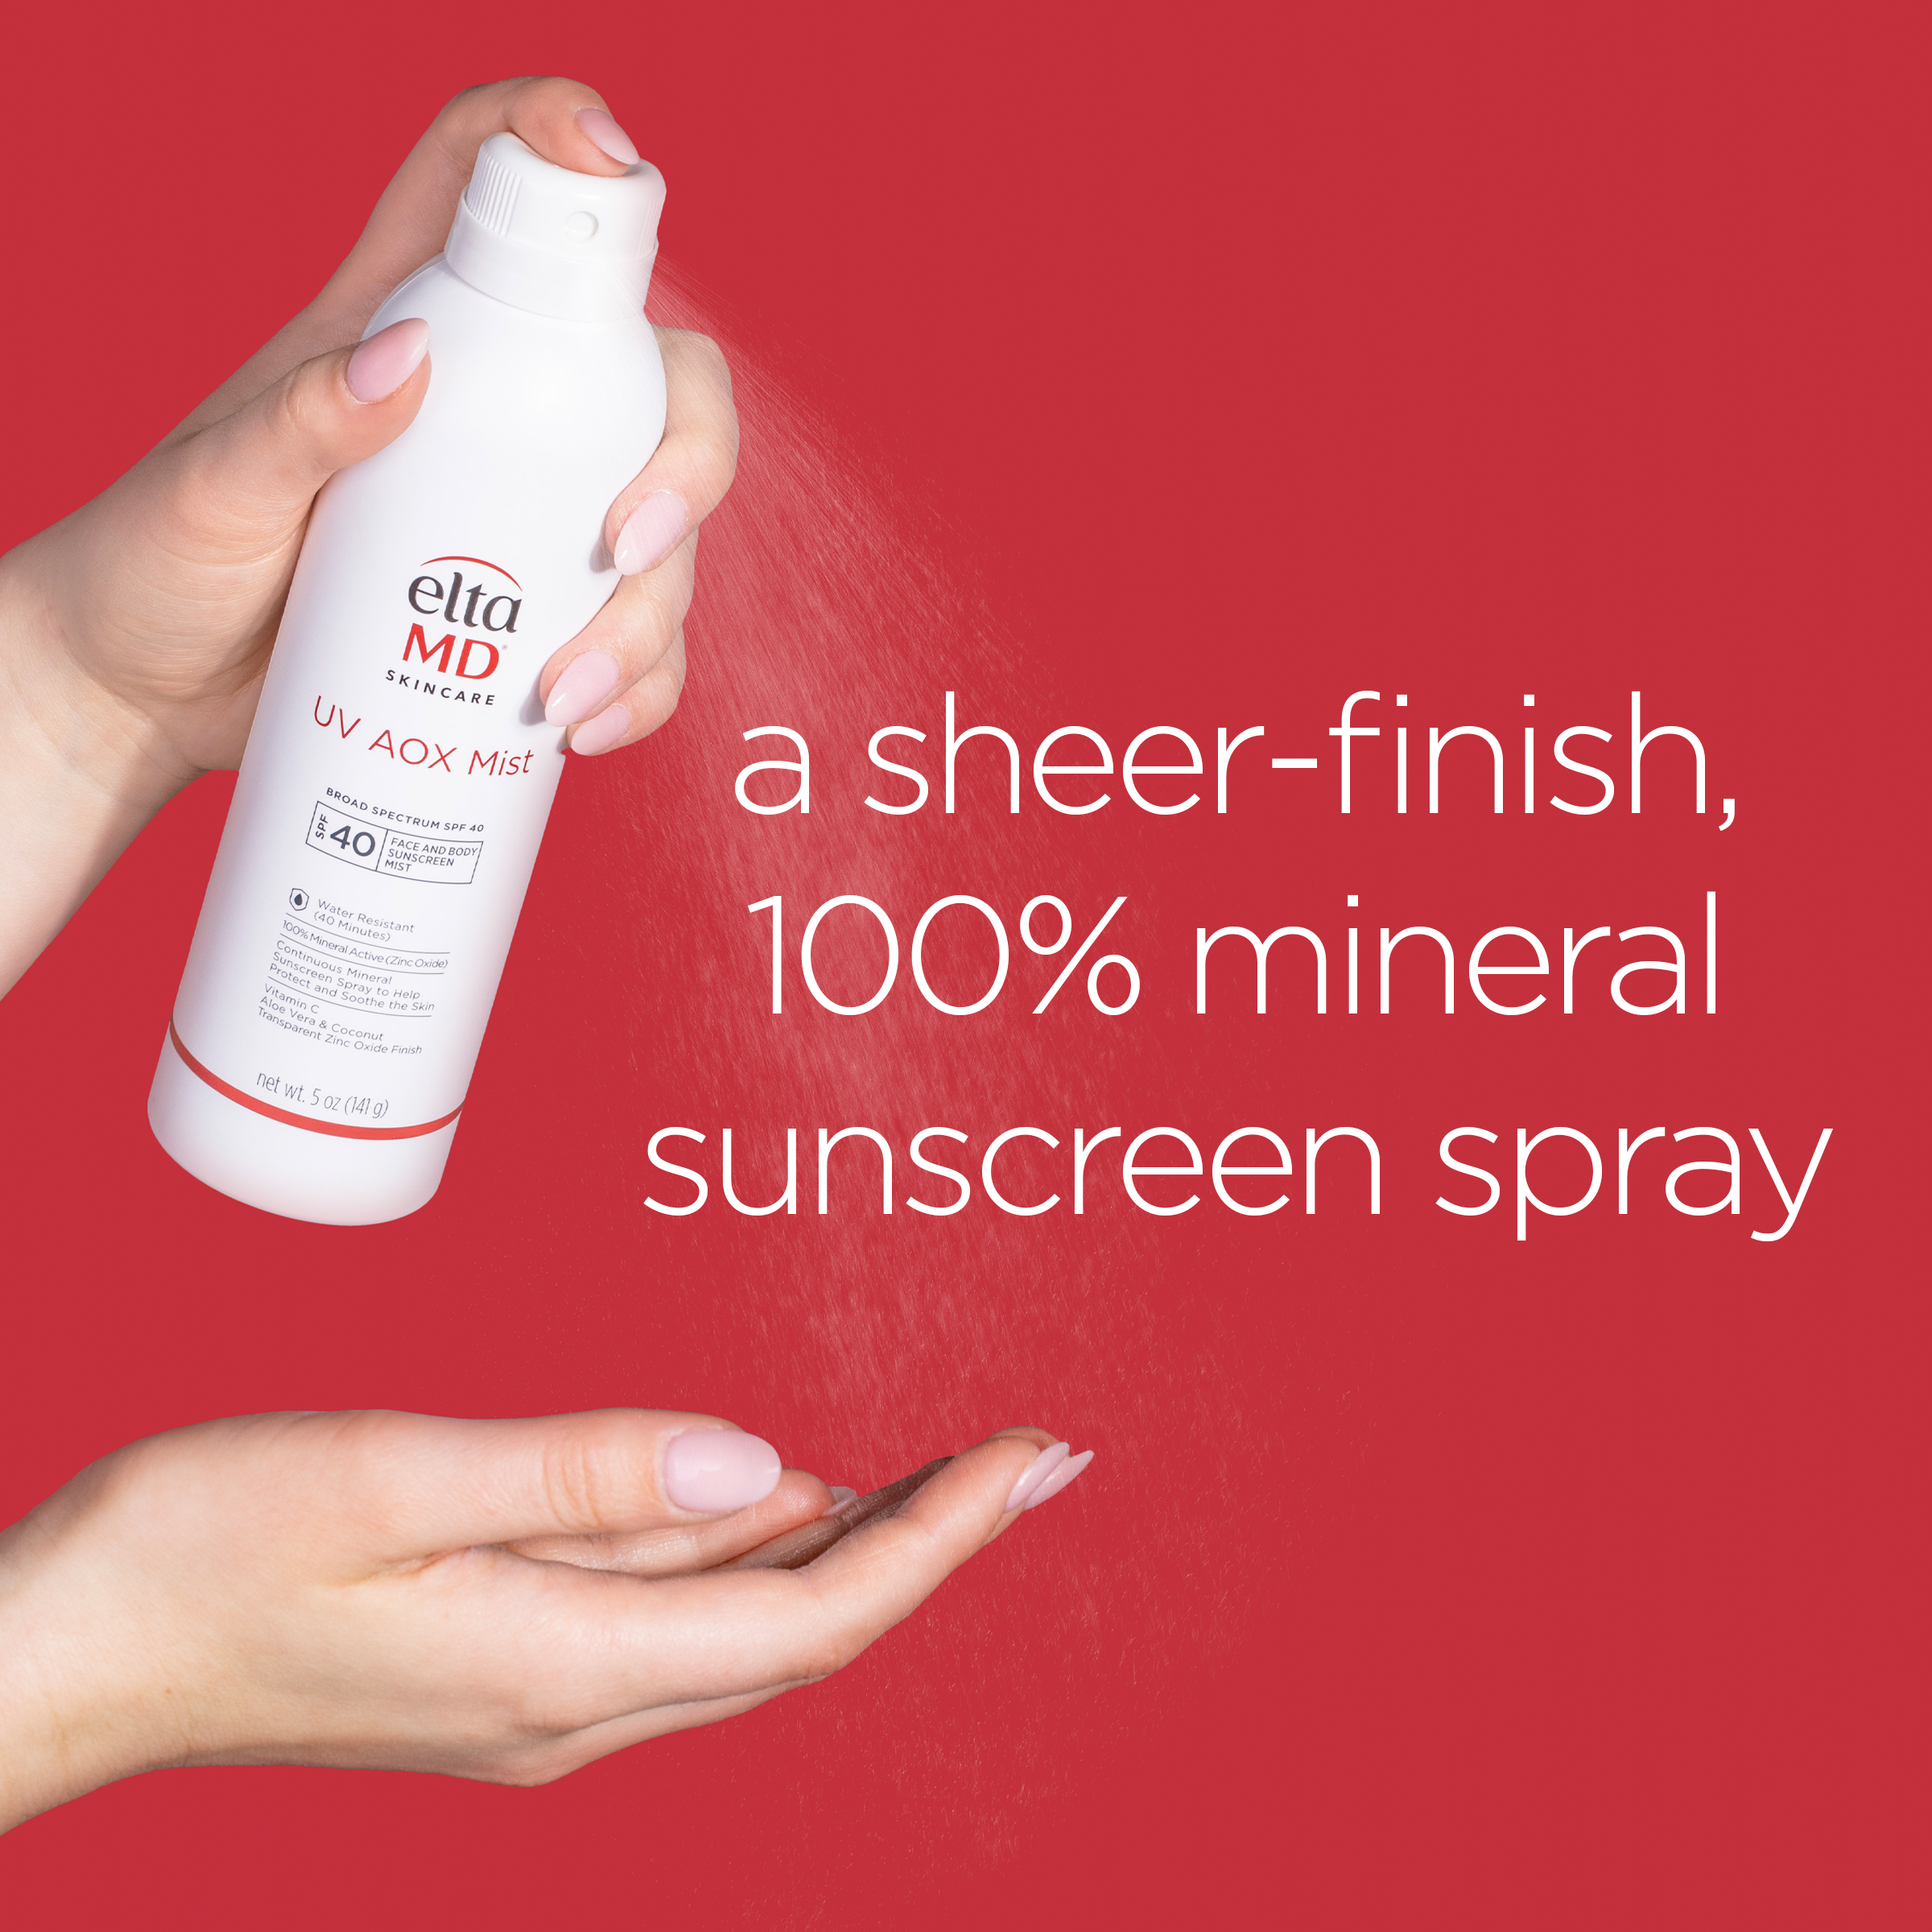 A sheer finish, 100% mineral sunscreen spray